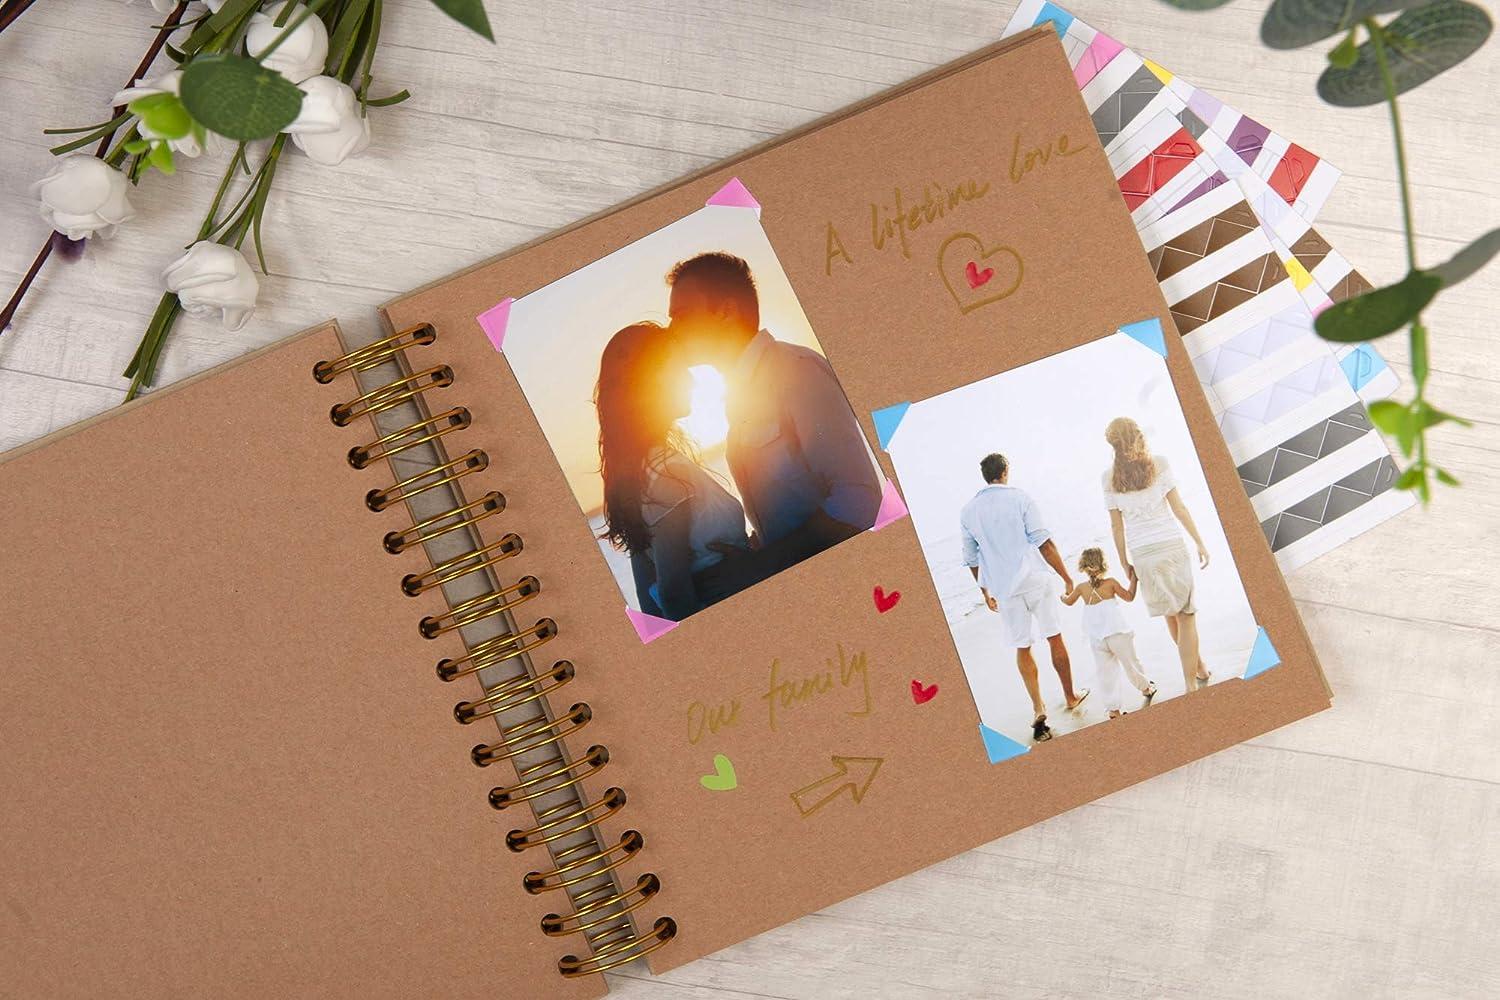 YX-1 10 x 10 inch DIY Scrapbook Photo Album Hardcover Kraft Blank Yellow Page Wedding and Anniversary Family Photo Album (Yellow